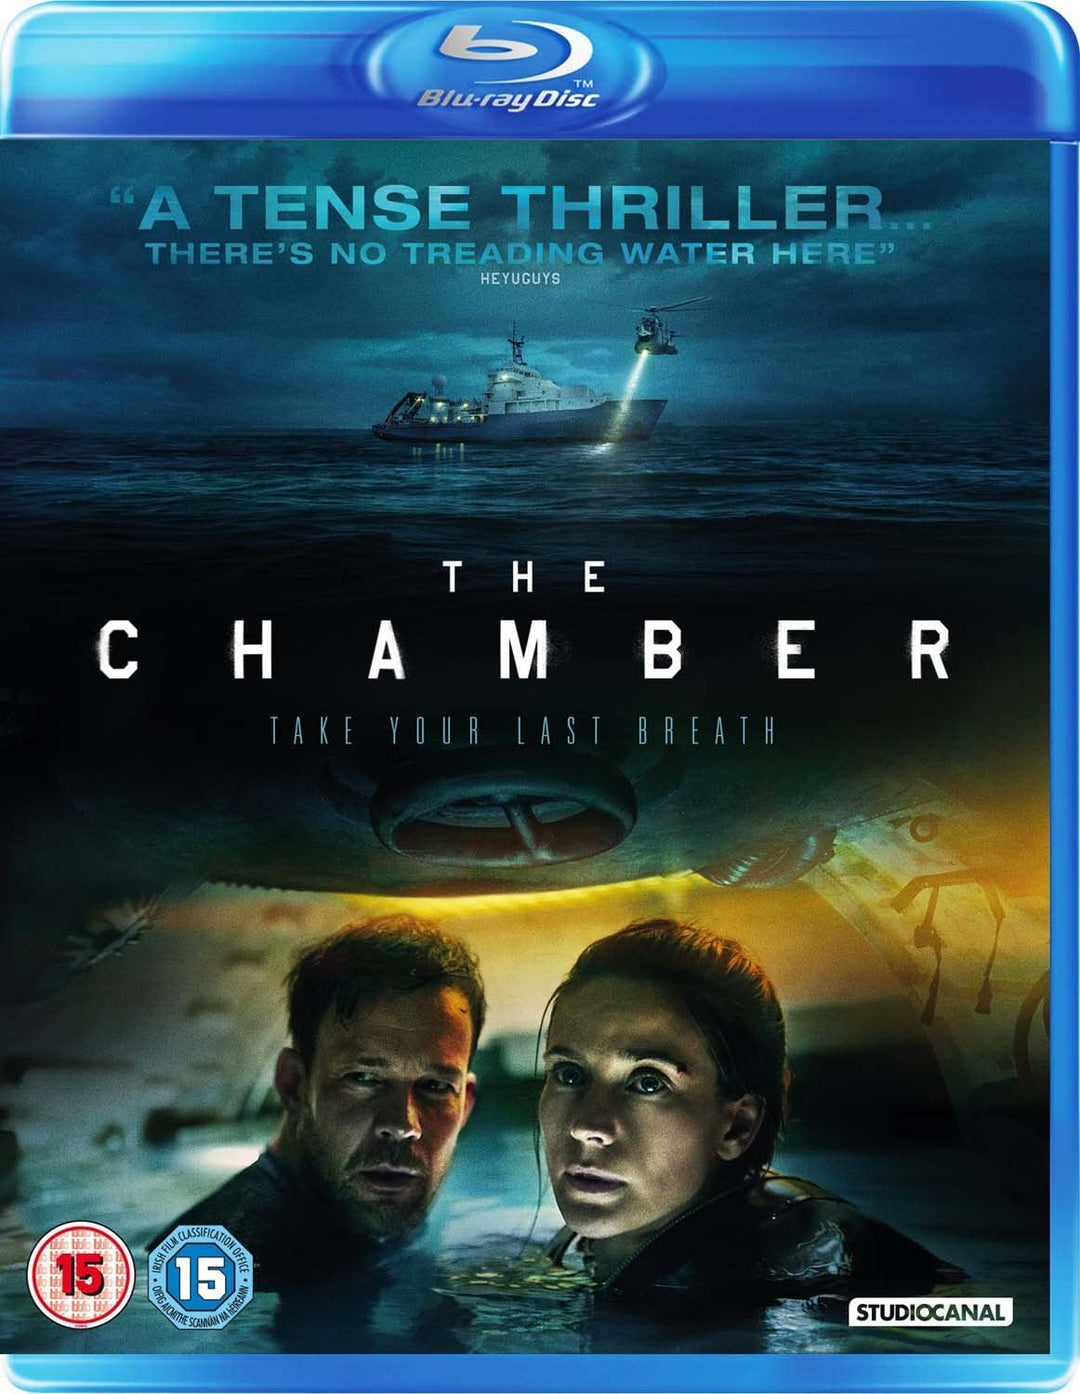 The Chamber [2017] - Drama/Thriller [DVD]